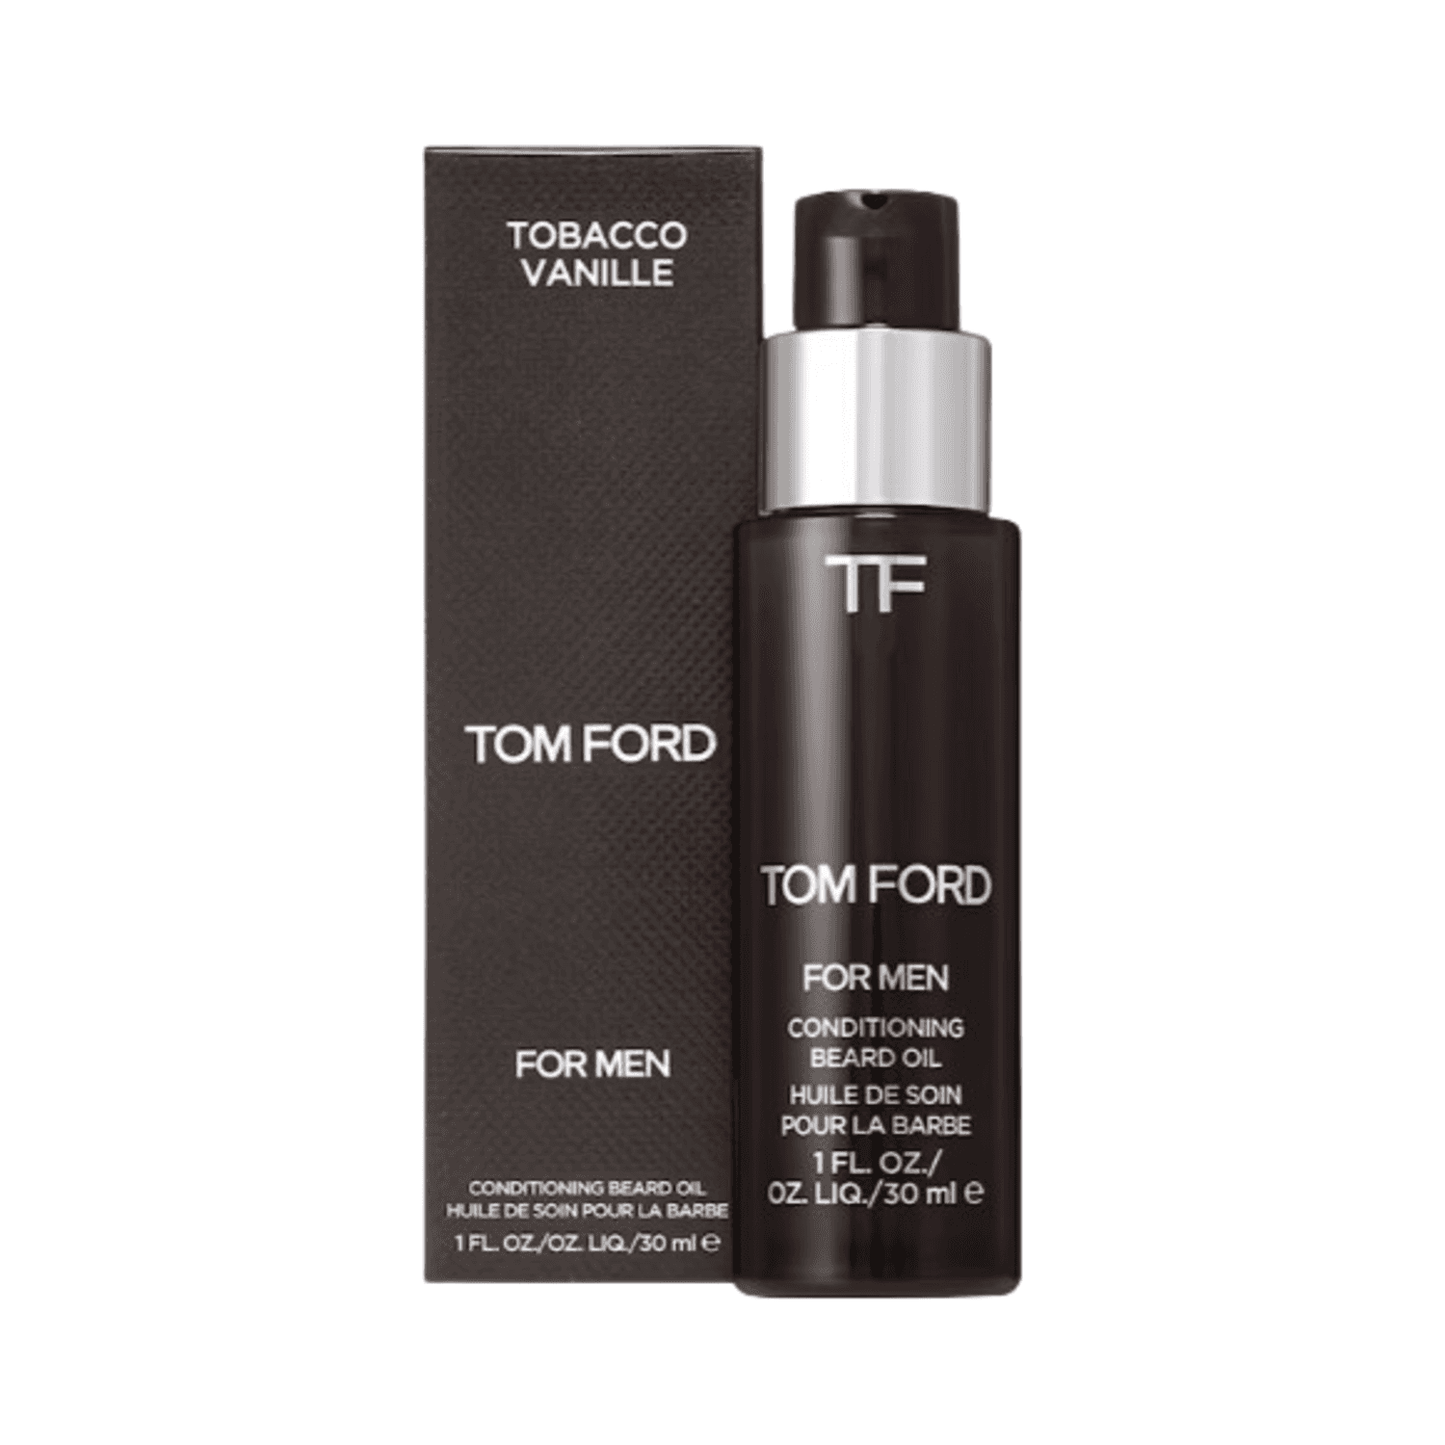 Tom Ford Beard Oil - Tobacco Vanille